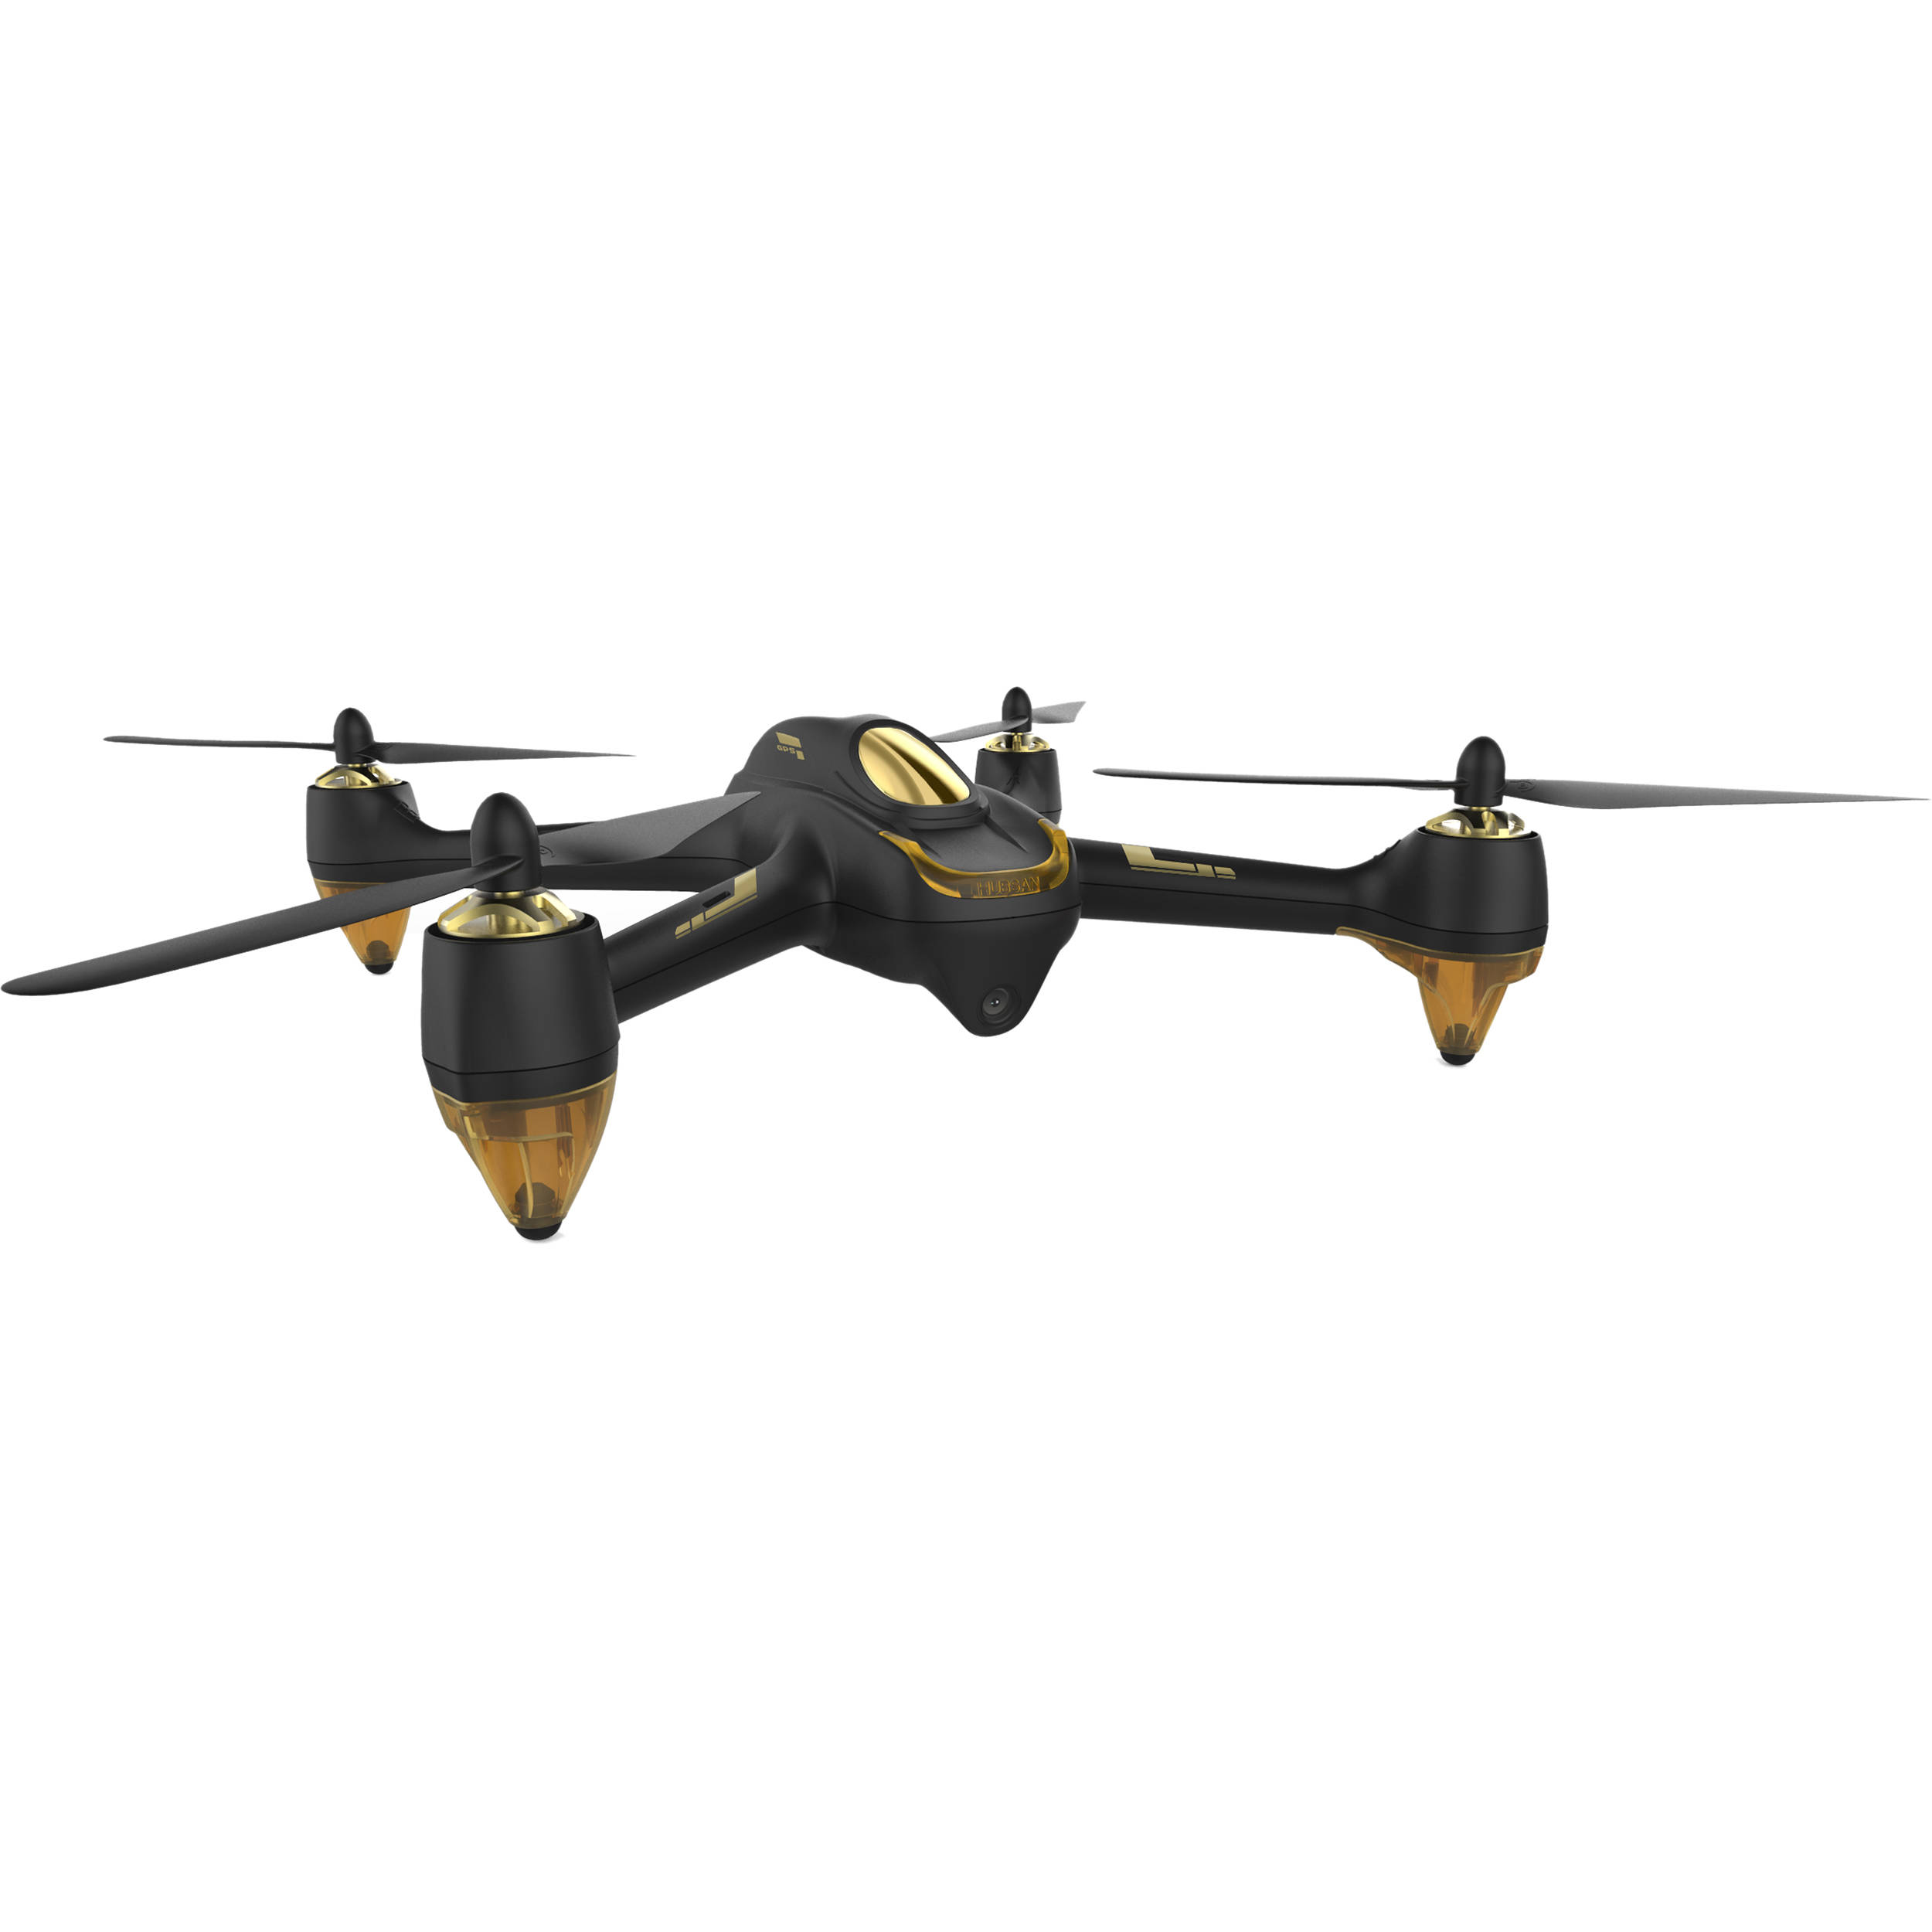 hubsan h501s x4 drone